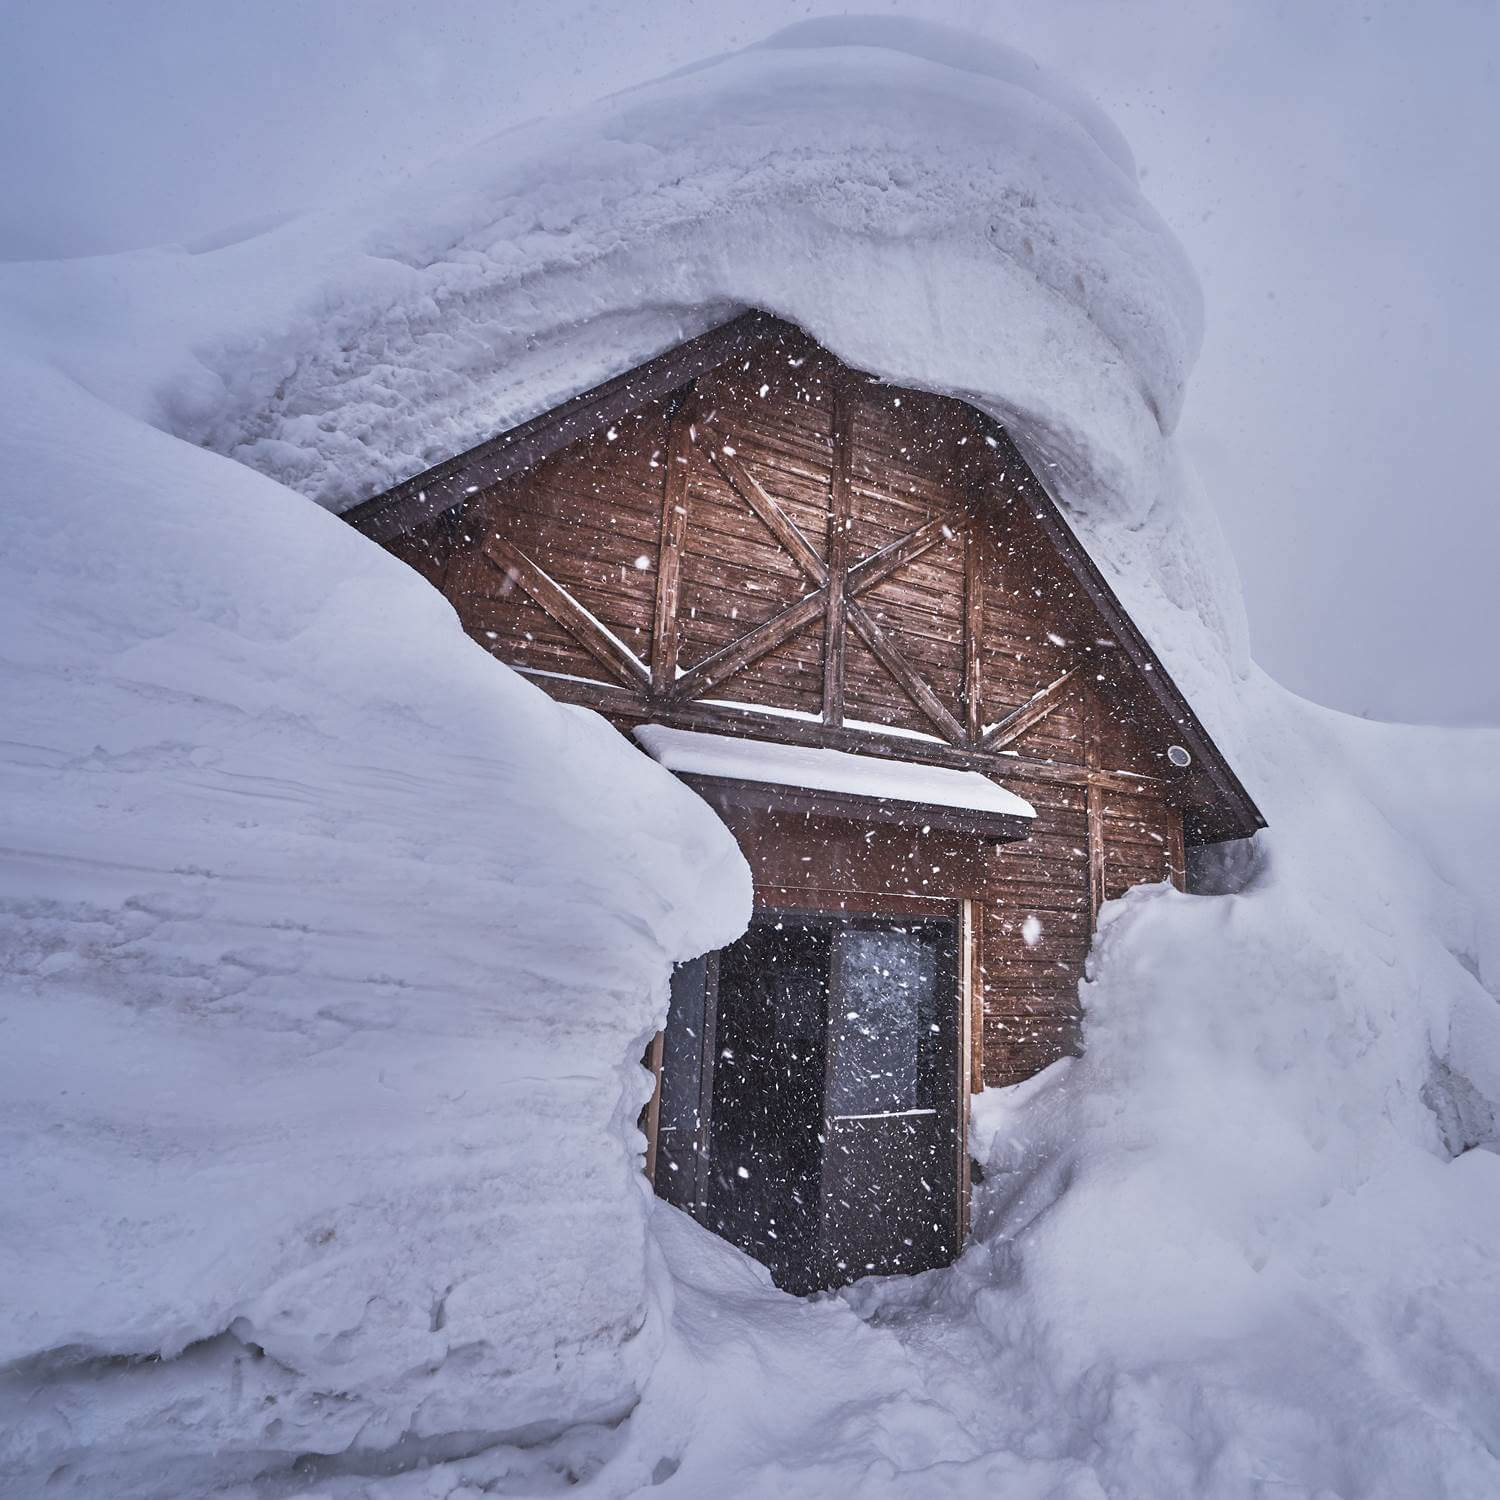 Hakkoda mountain in heavy snowfall, Aomori Prefecture, Japan = Shutterstock 8